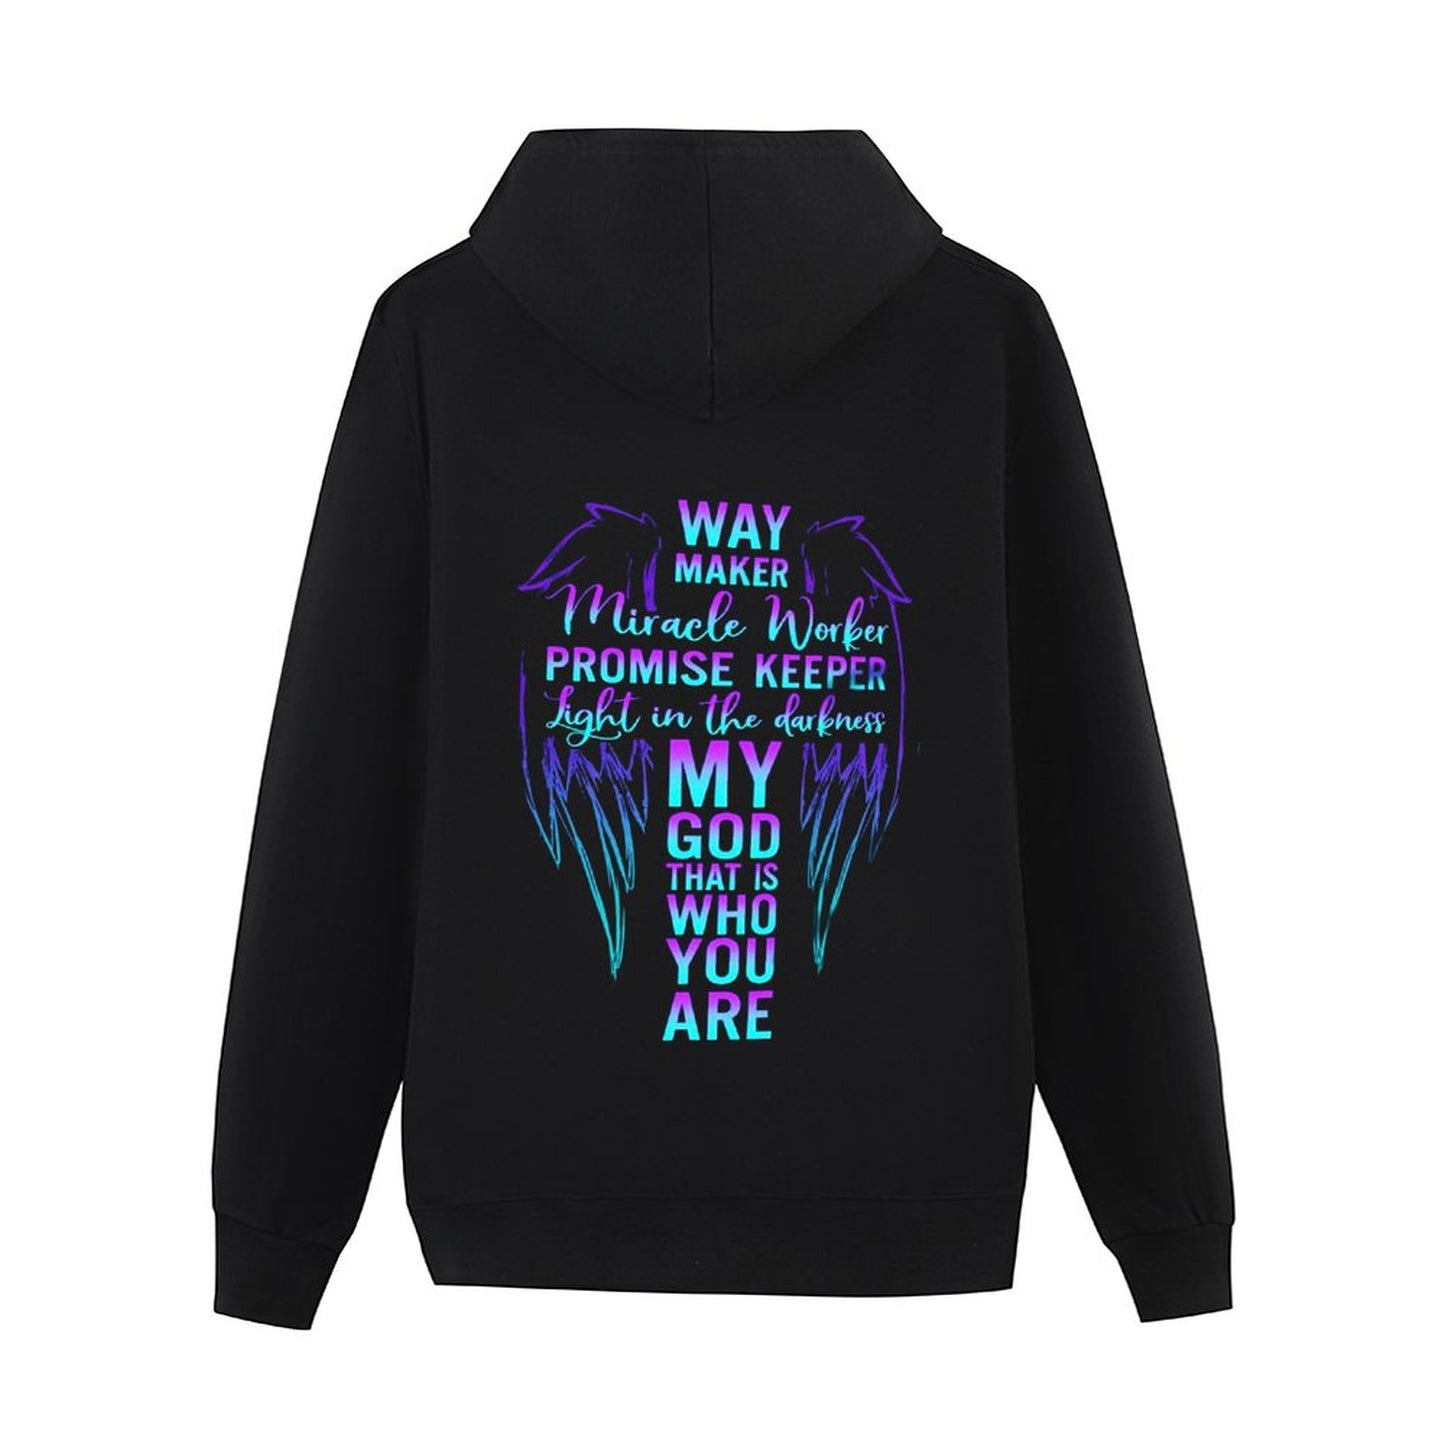 Online DIY Women's Hoodie Sweatshirt Promise Keeper Light in The Darkness Shirt